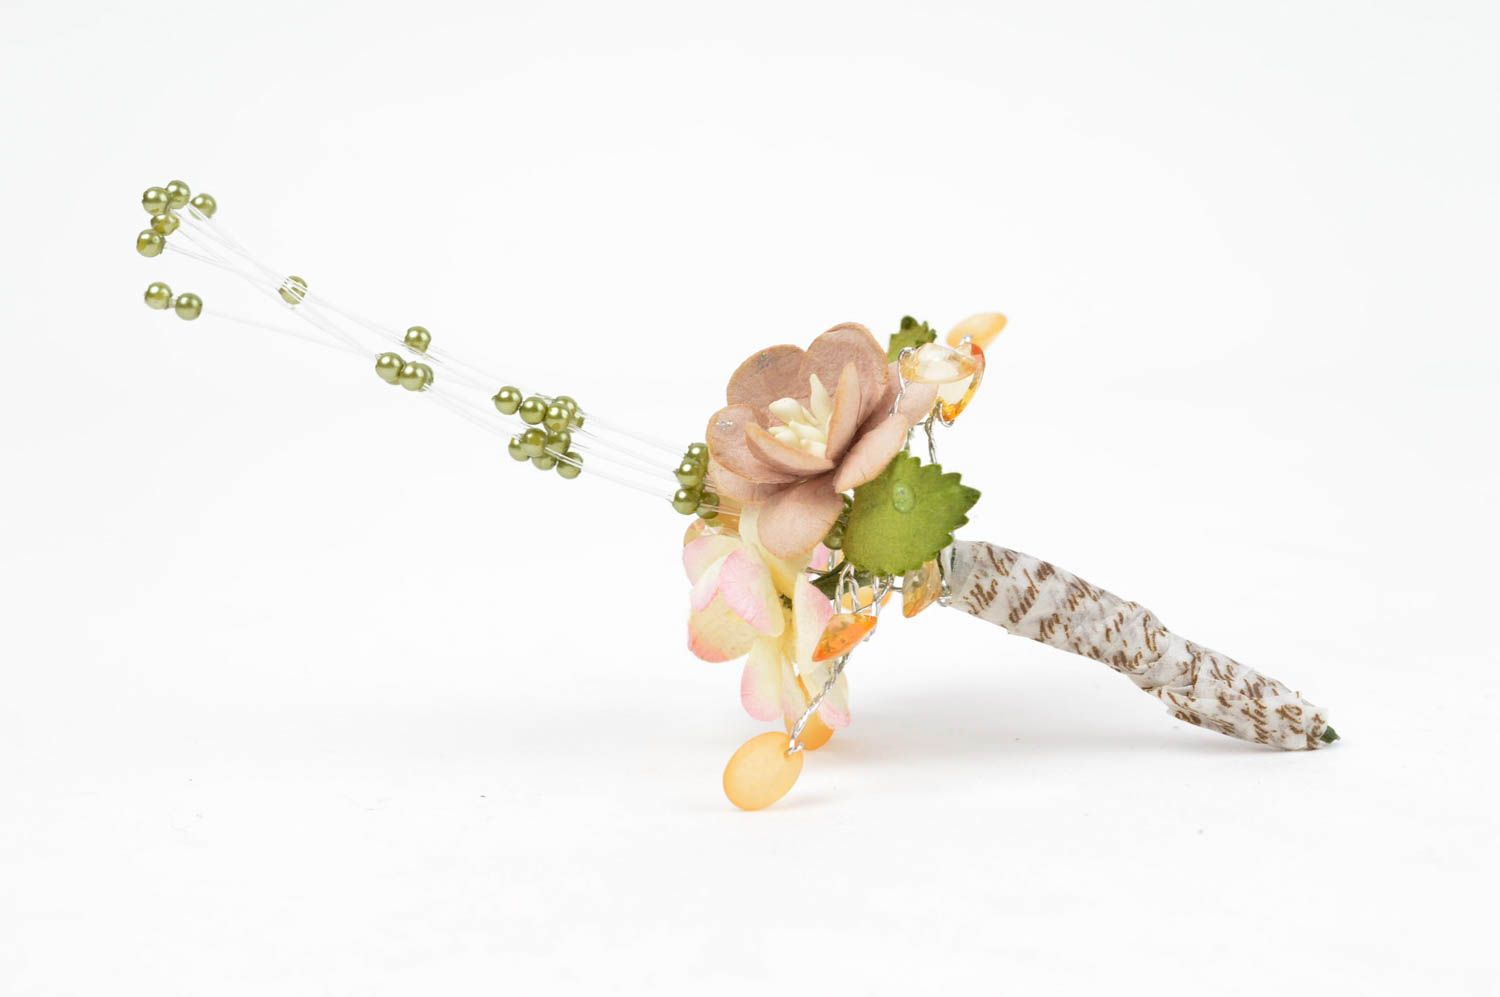 Handmade bouquet designer bouquet interior decor gift ideas artificial flowers photo 2